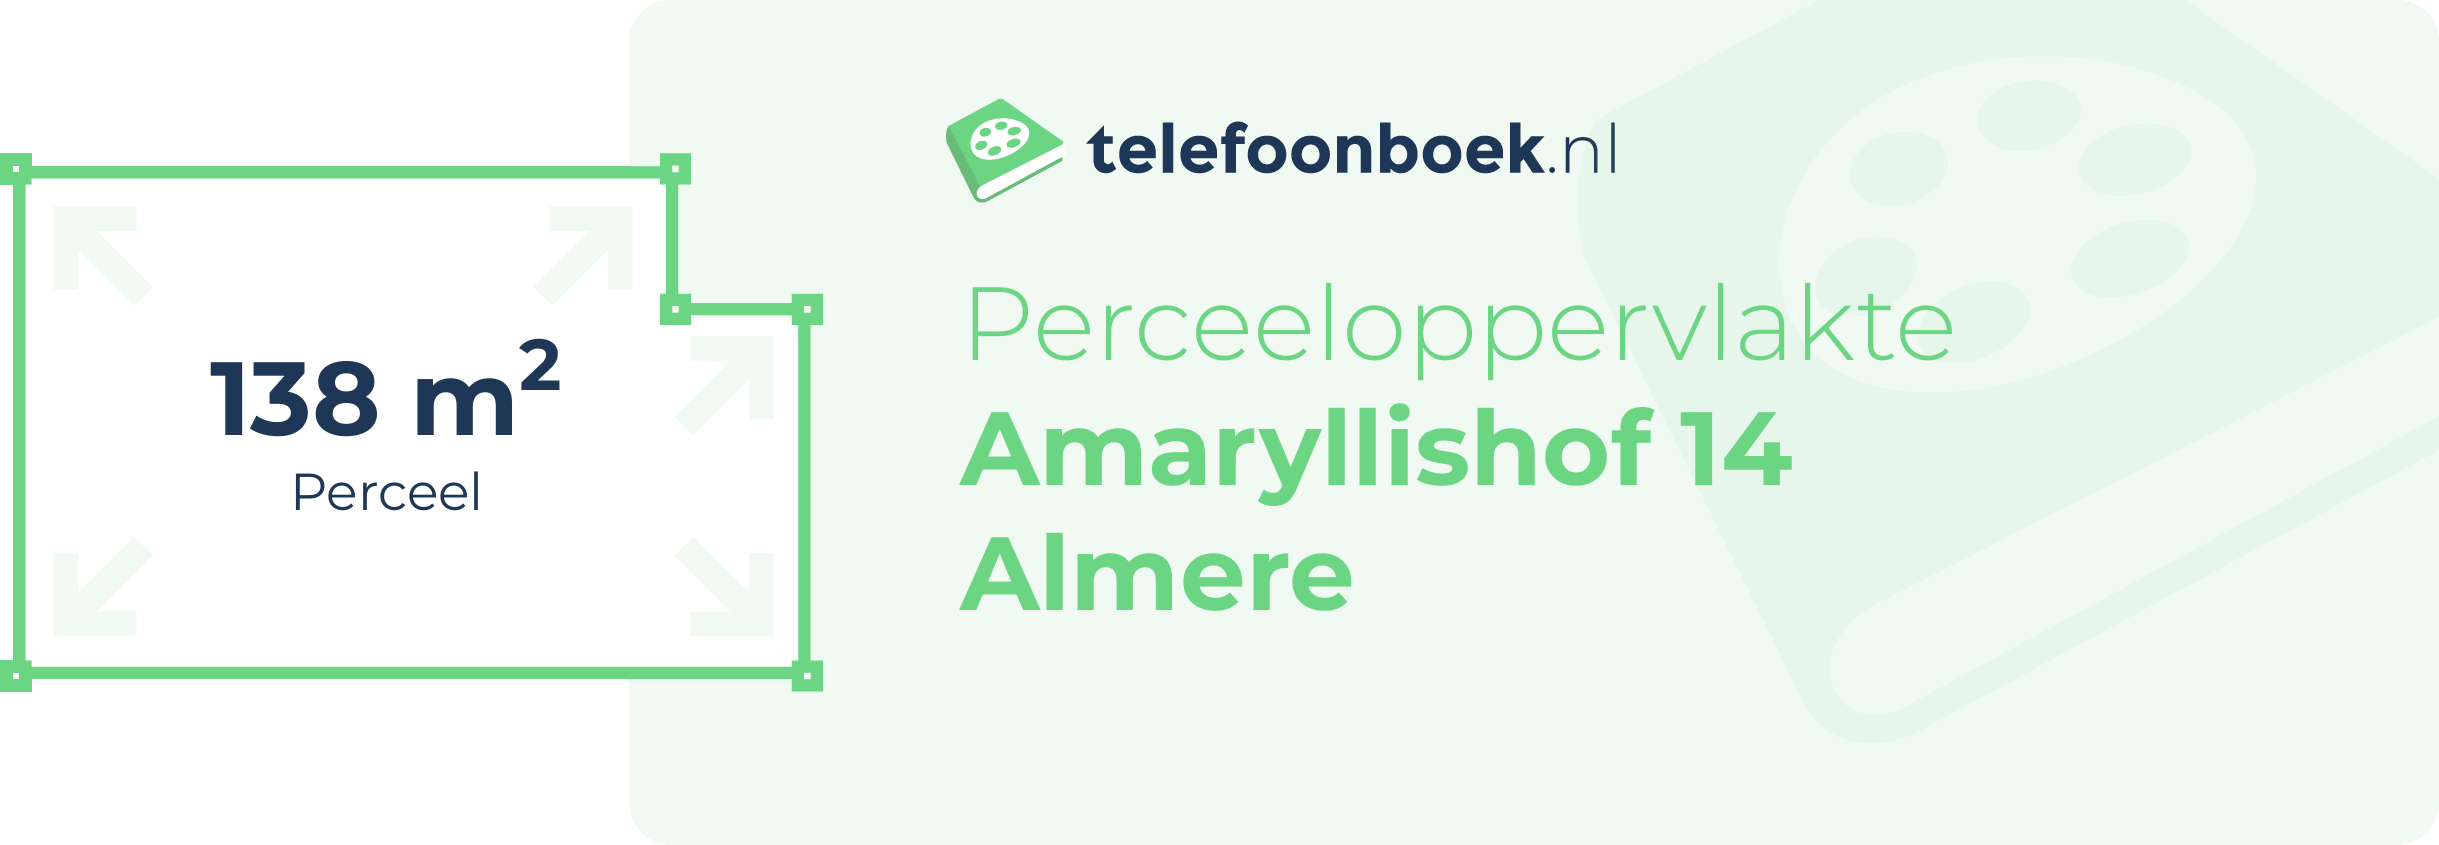 Perceeloppervlakte Amaryllishof 14 Almere